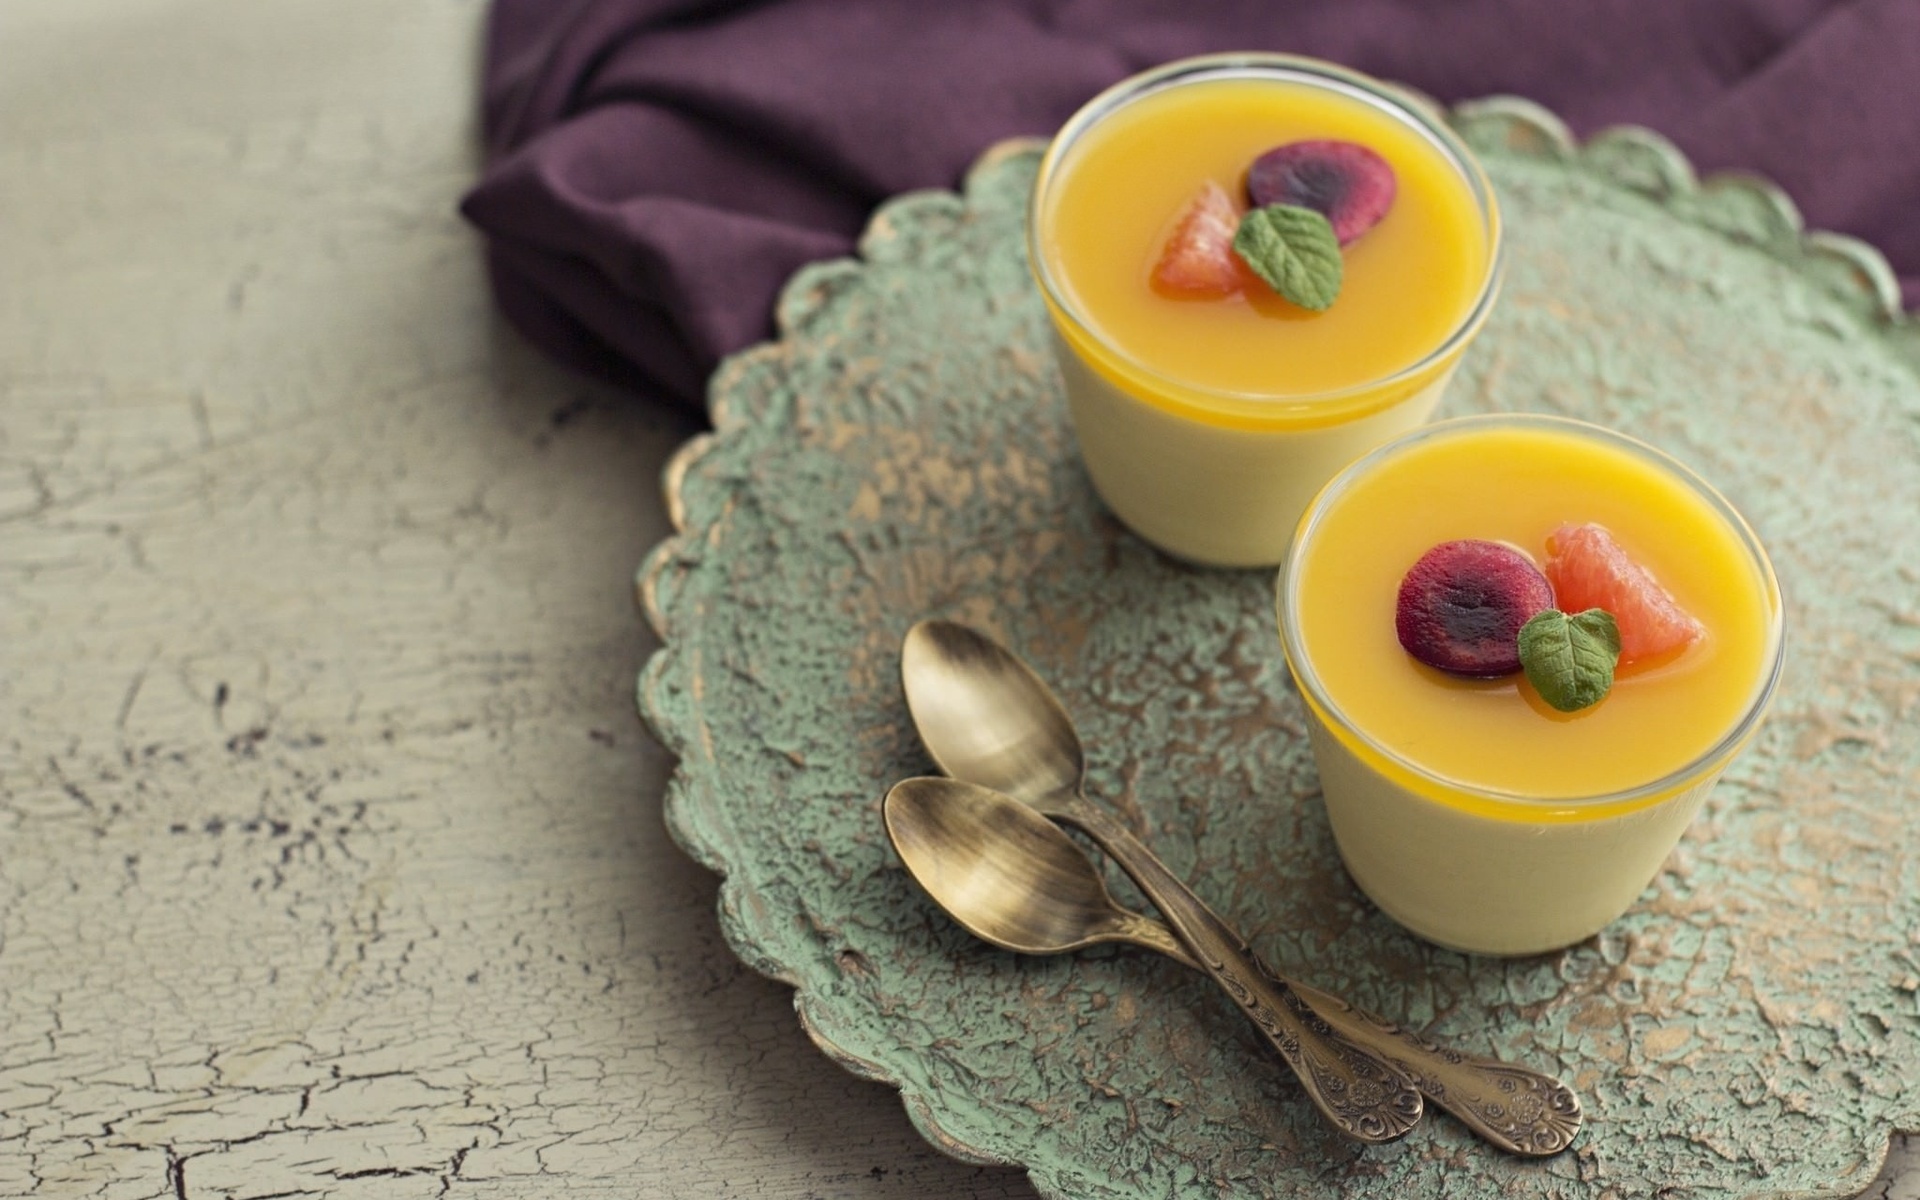 Image: Dessert, sweet, wedges, tangerine, mint, spoons